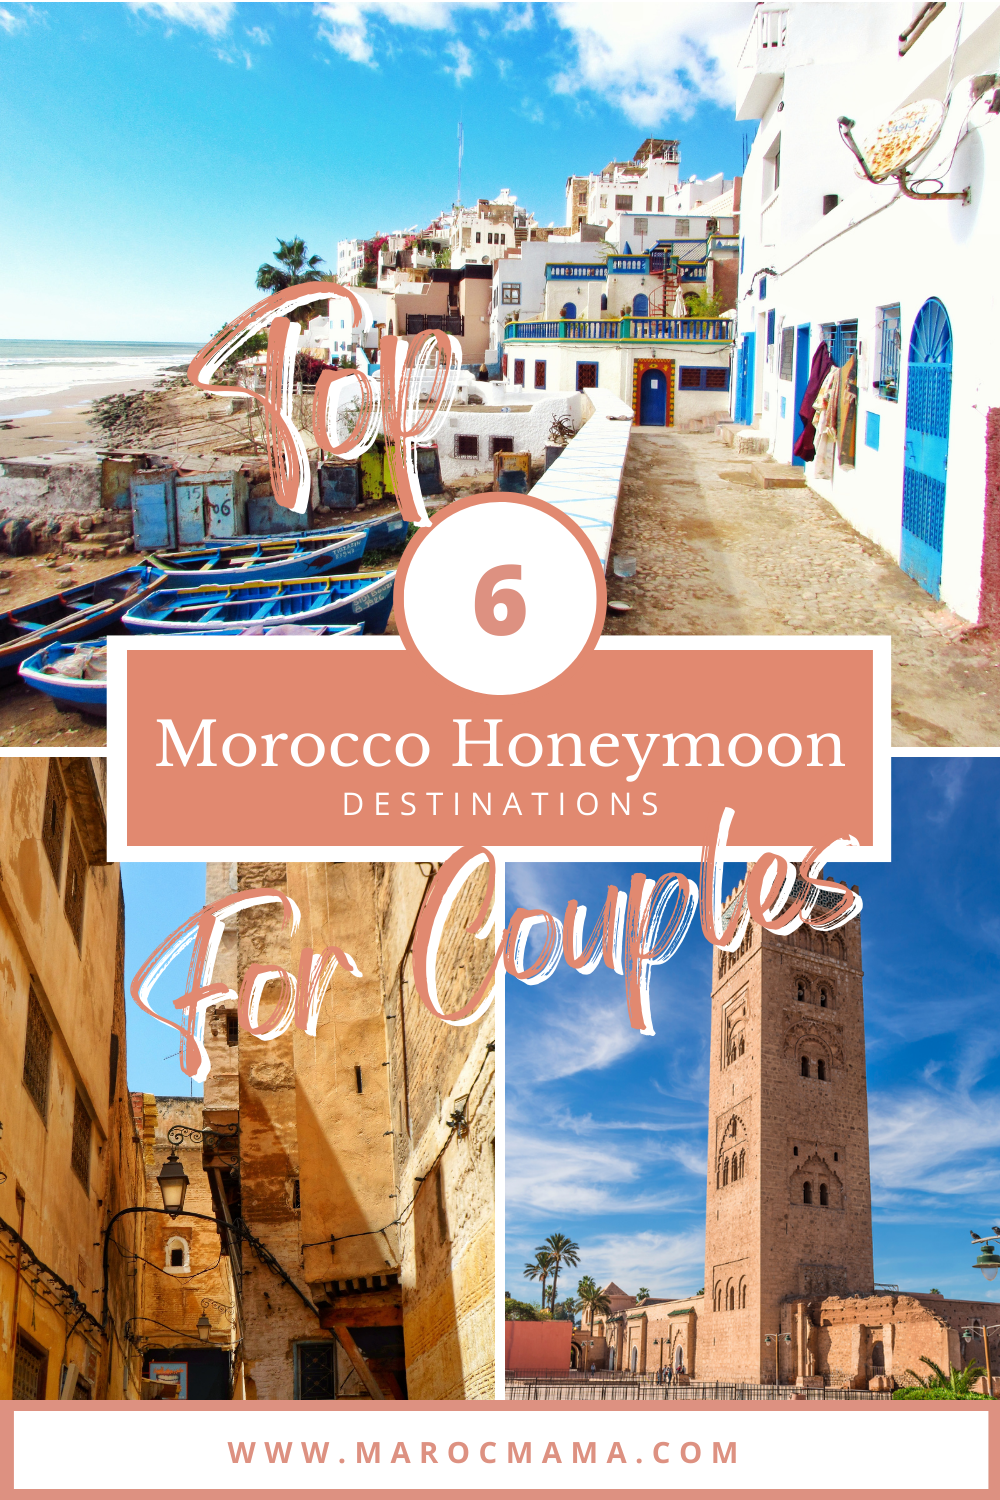 Morocco honeymoon destinations